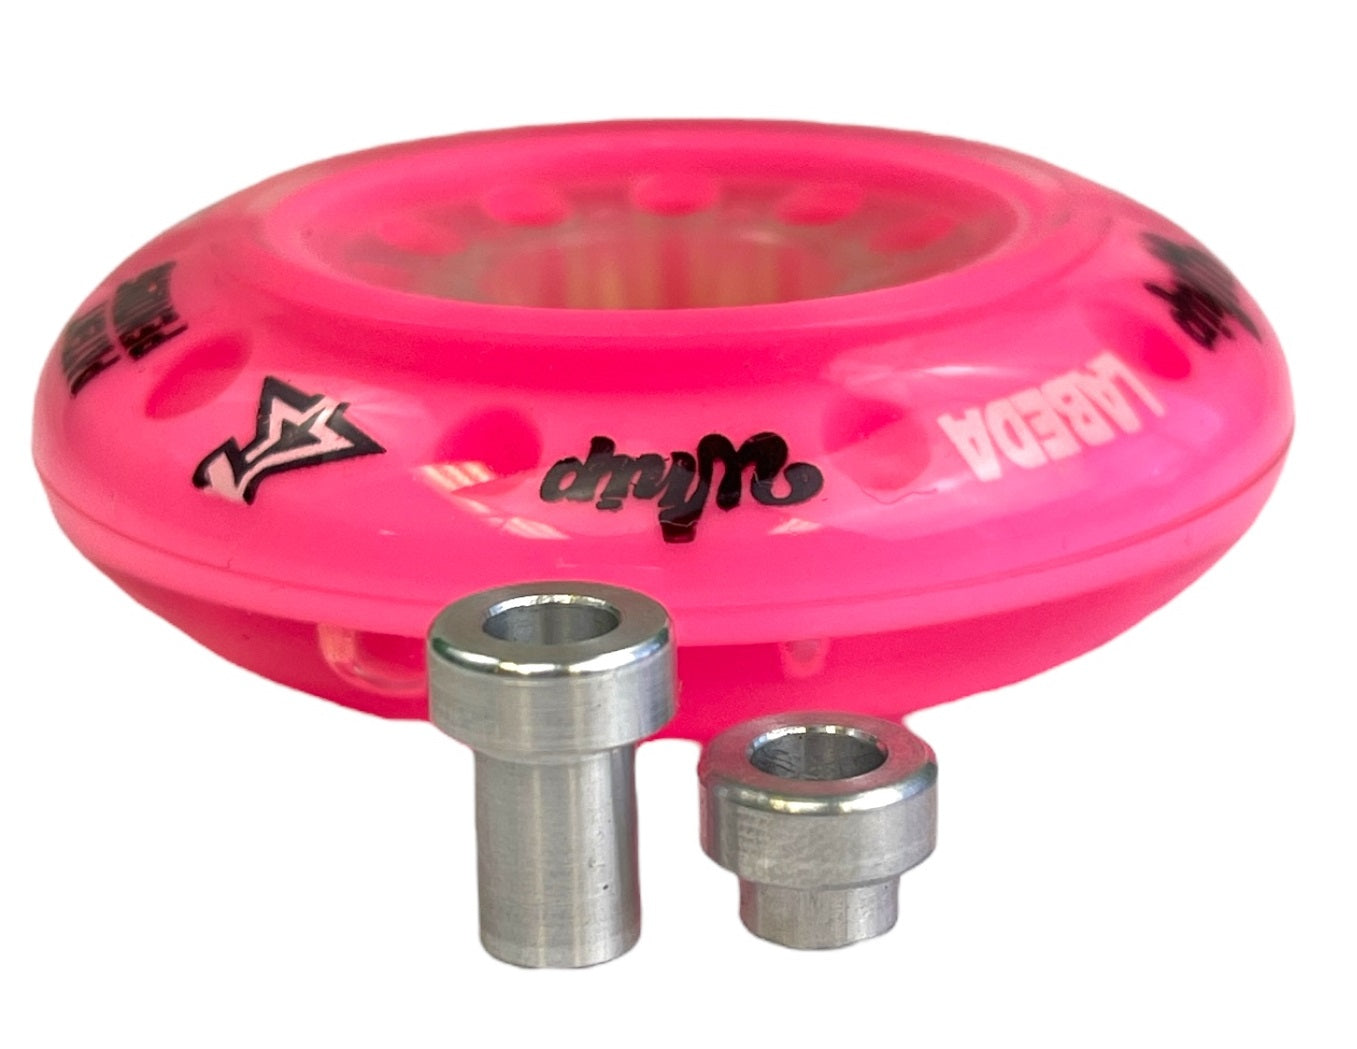 Labeda Roller Hockey Wheel Whip X-Soft – Pink